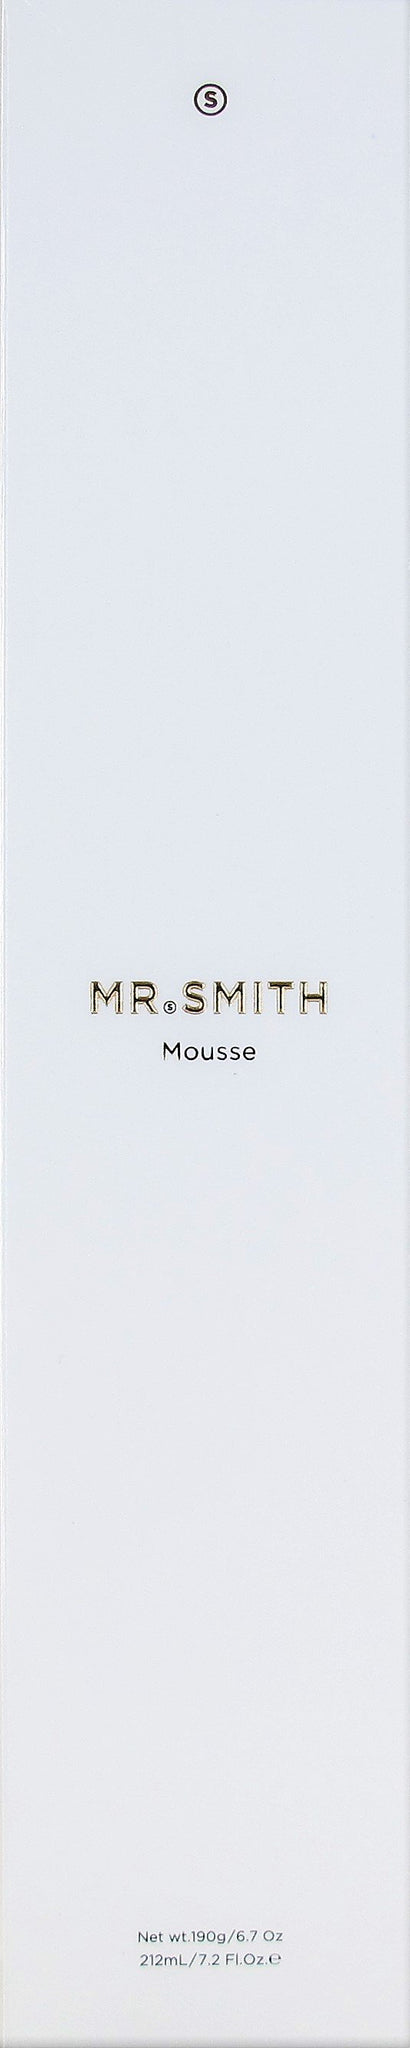 Mr. Smith Mousse 7.2 oz